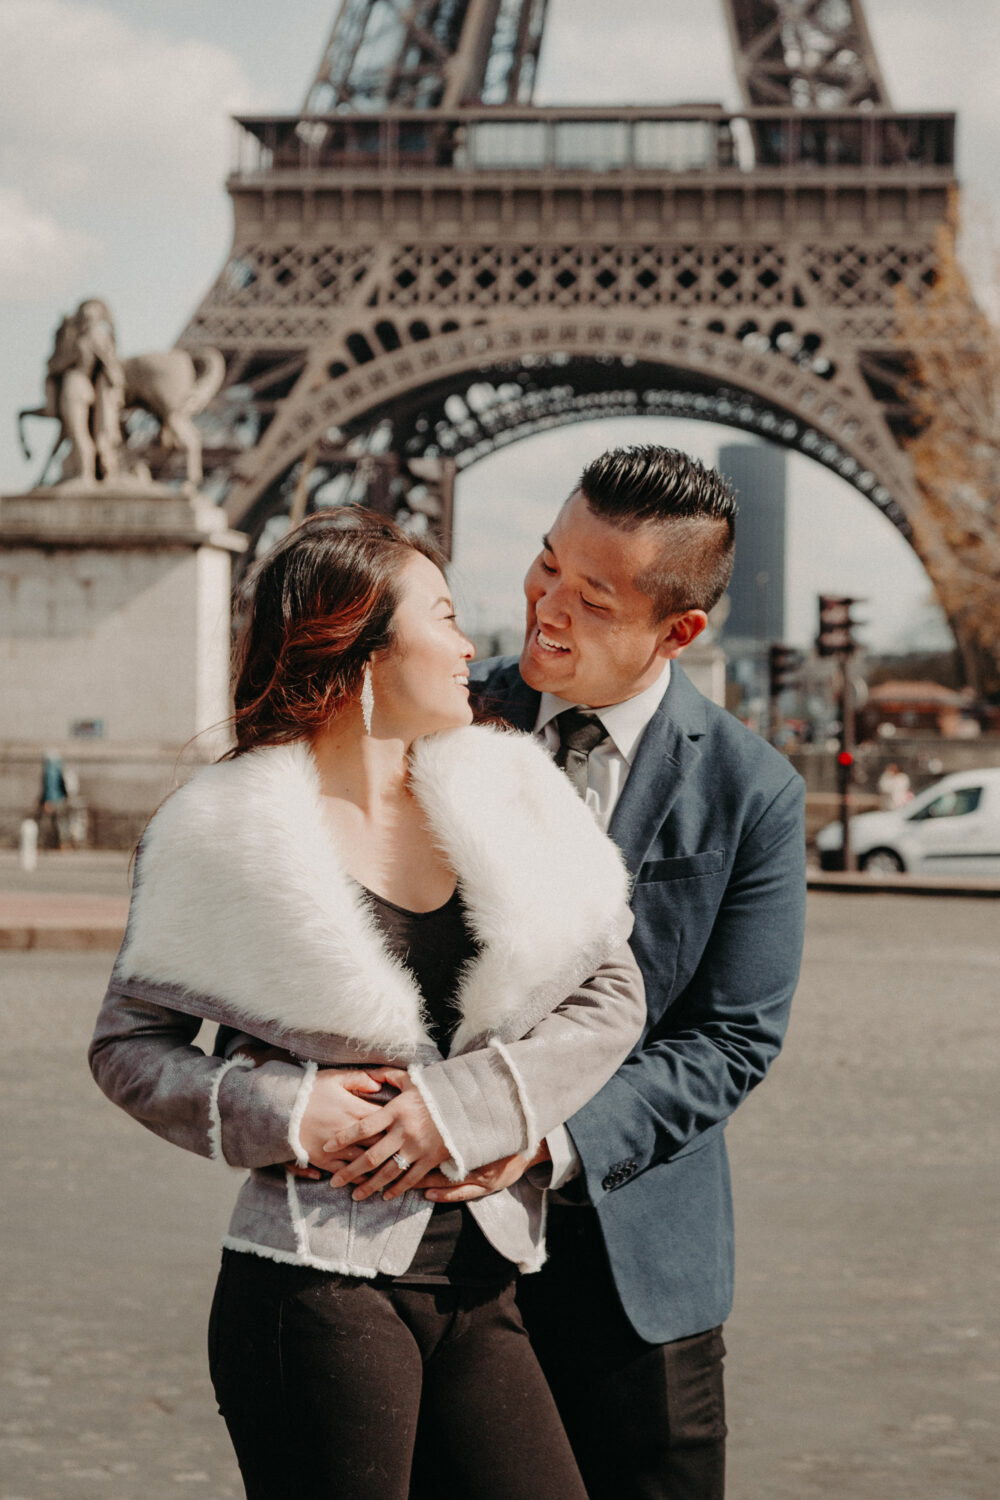 Eiffel Tower Surprise proposal photoshoot - Samuel & Erica